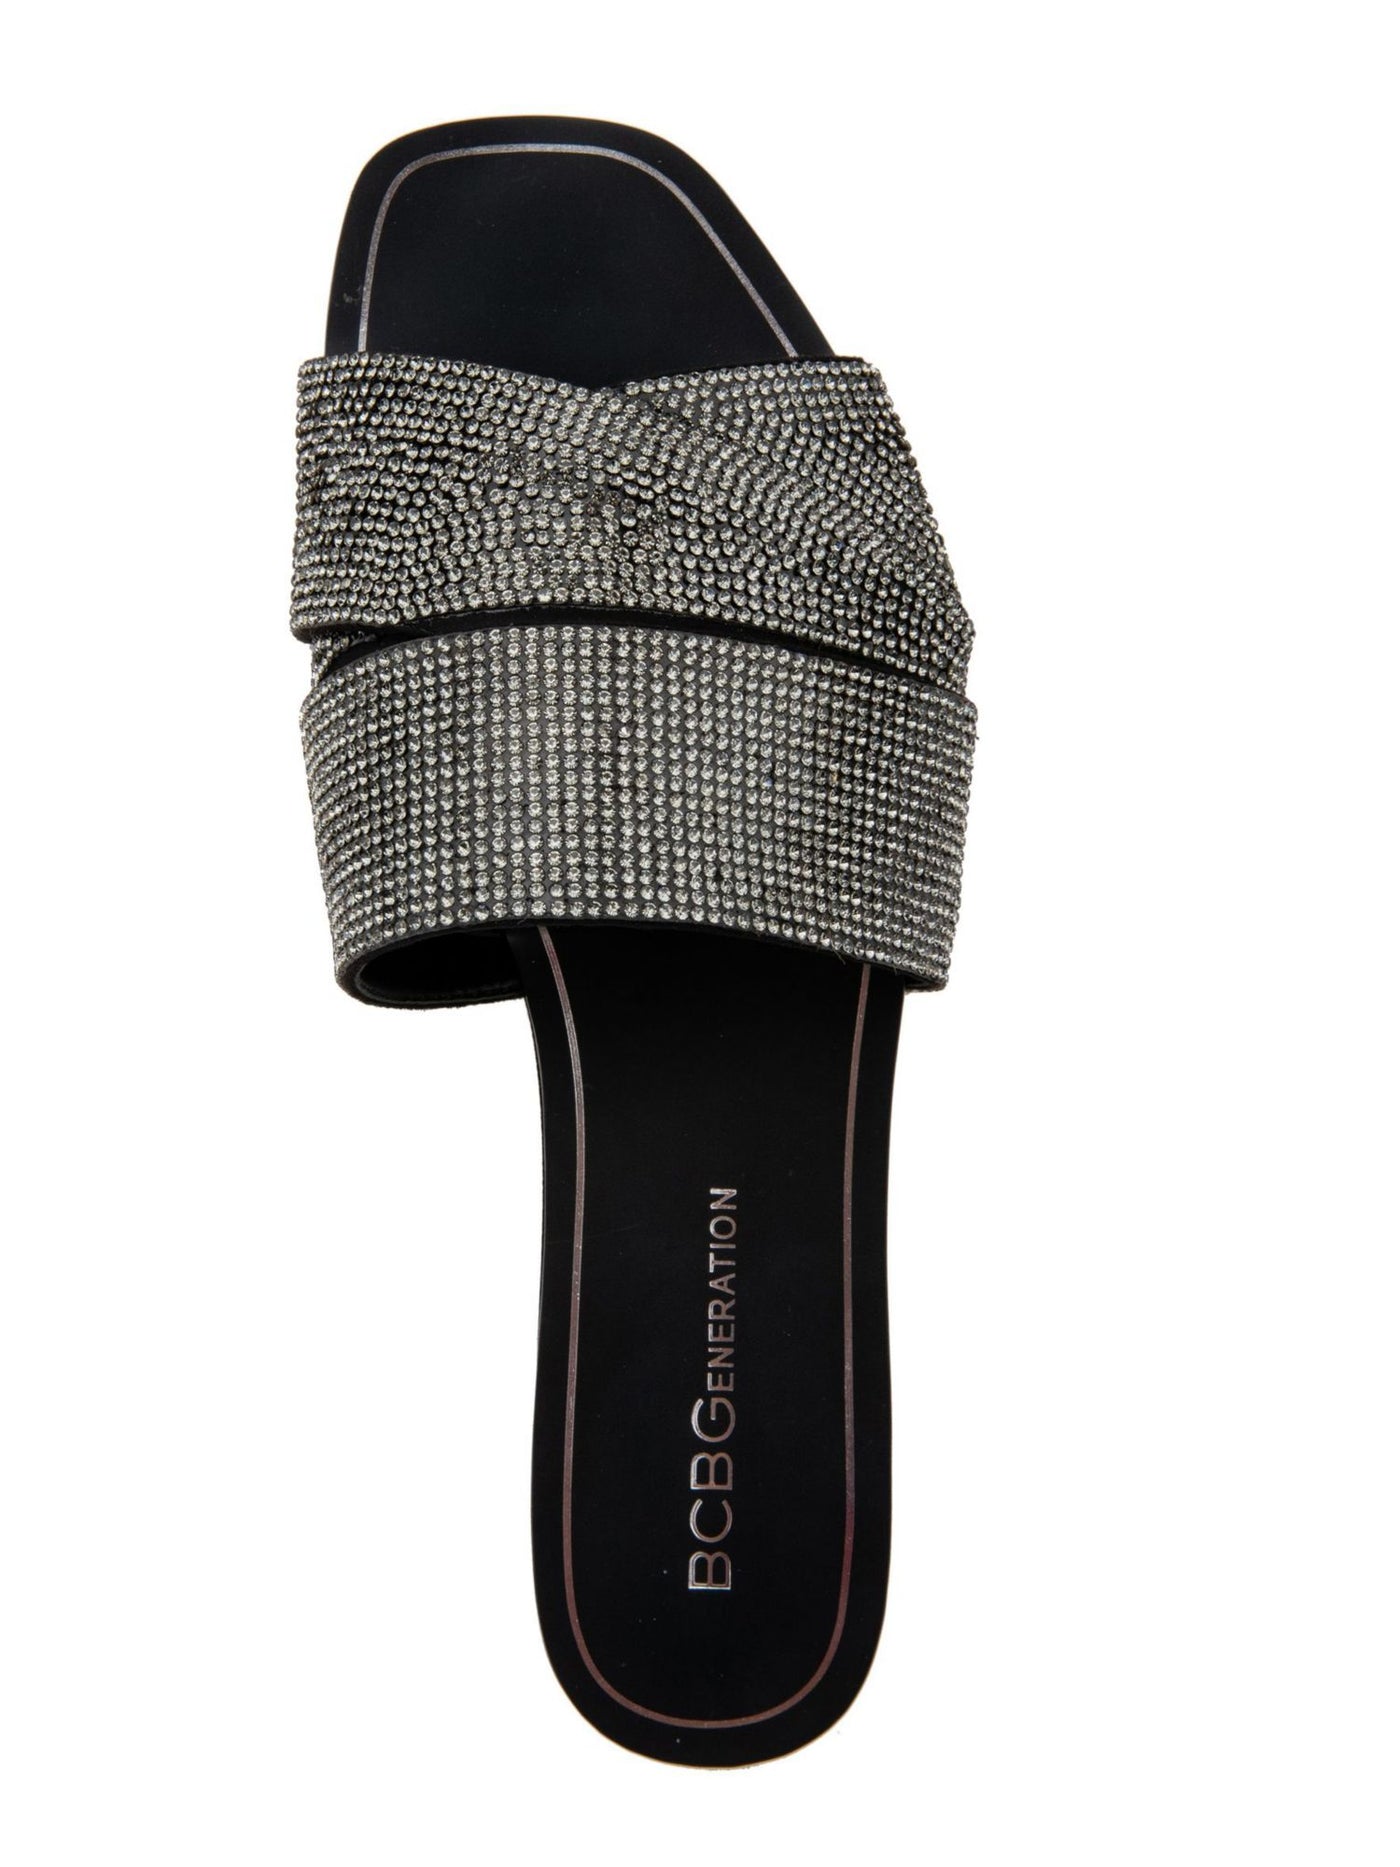 BCBGENERATION Womens Black Embellished Kandace Square Toe Slip On Slide Sandals Shoes 6.5 M